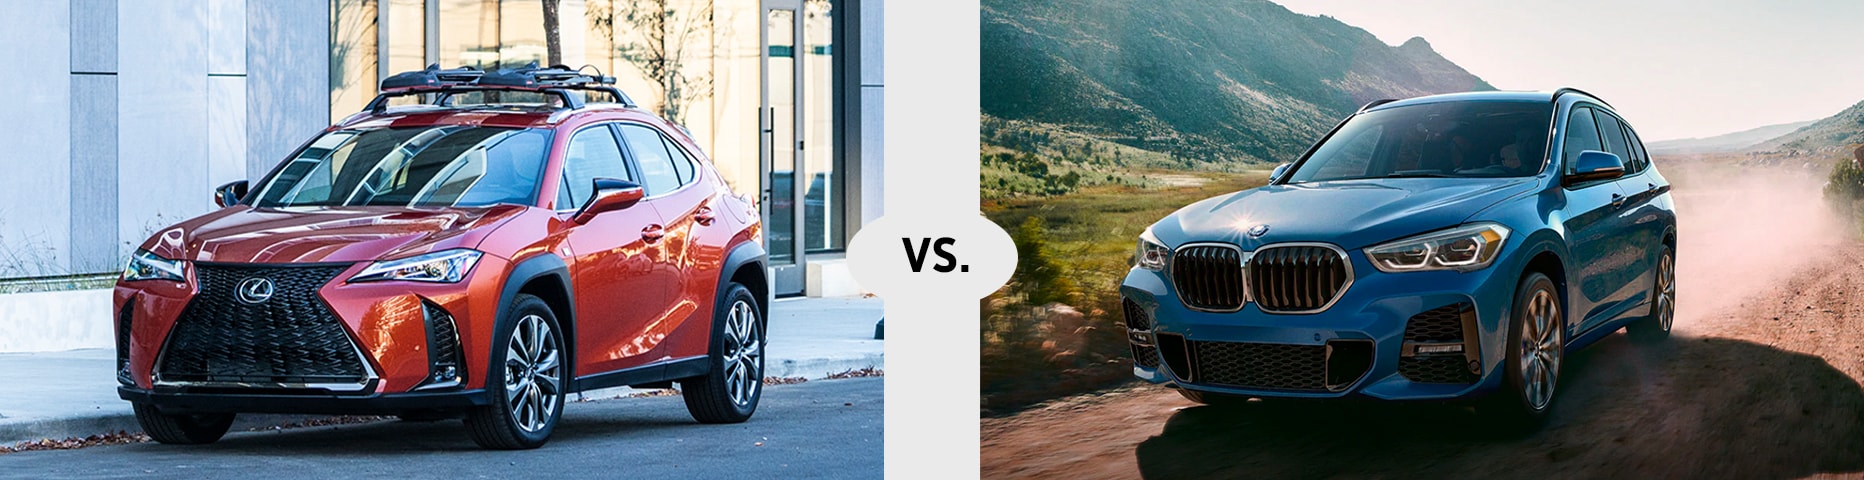 2020 Lexus UX vs. BMW X1